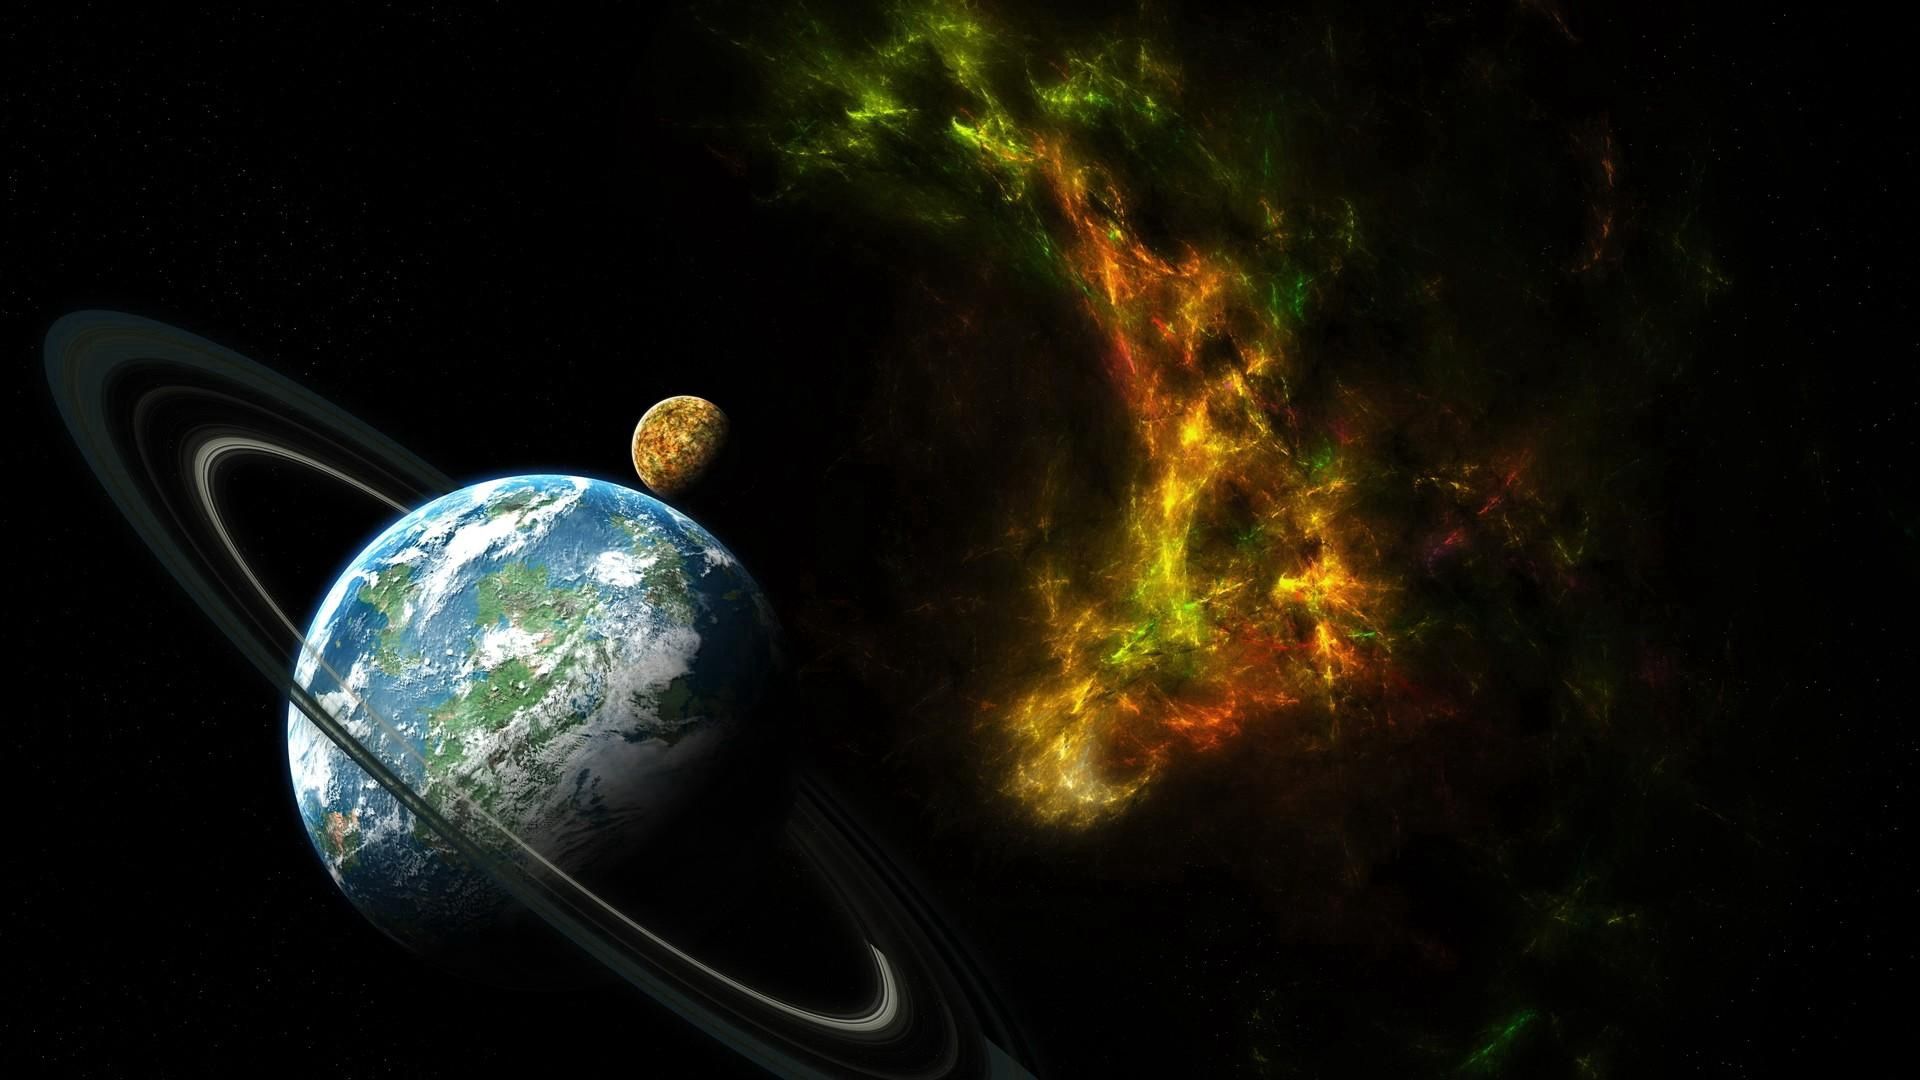 Descarga gratis la imagen Anillo, Planeta, Nebulosa, Universo en el escritorio de tu PC